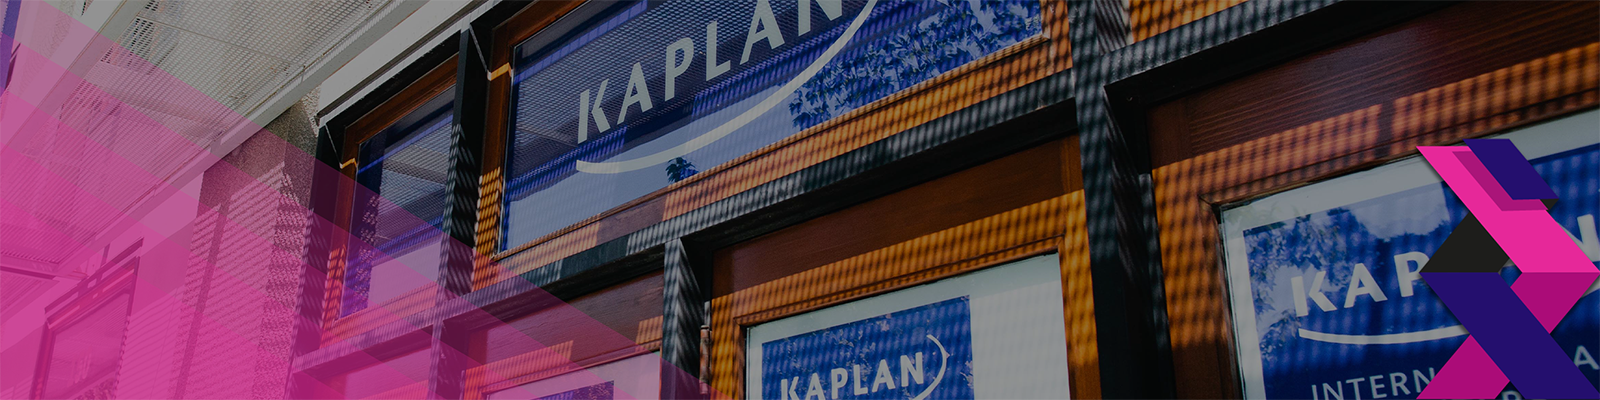 Kaplan International Languages - Boston Harvard Square görseli